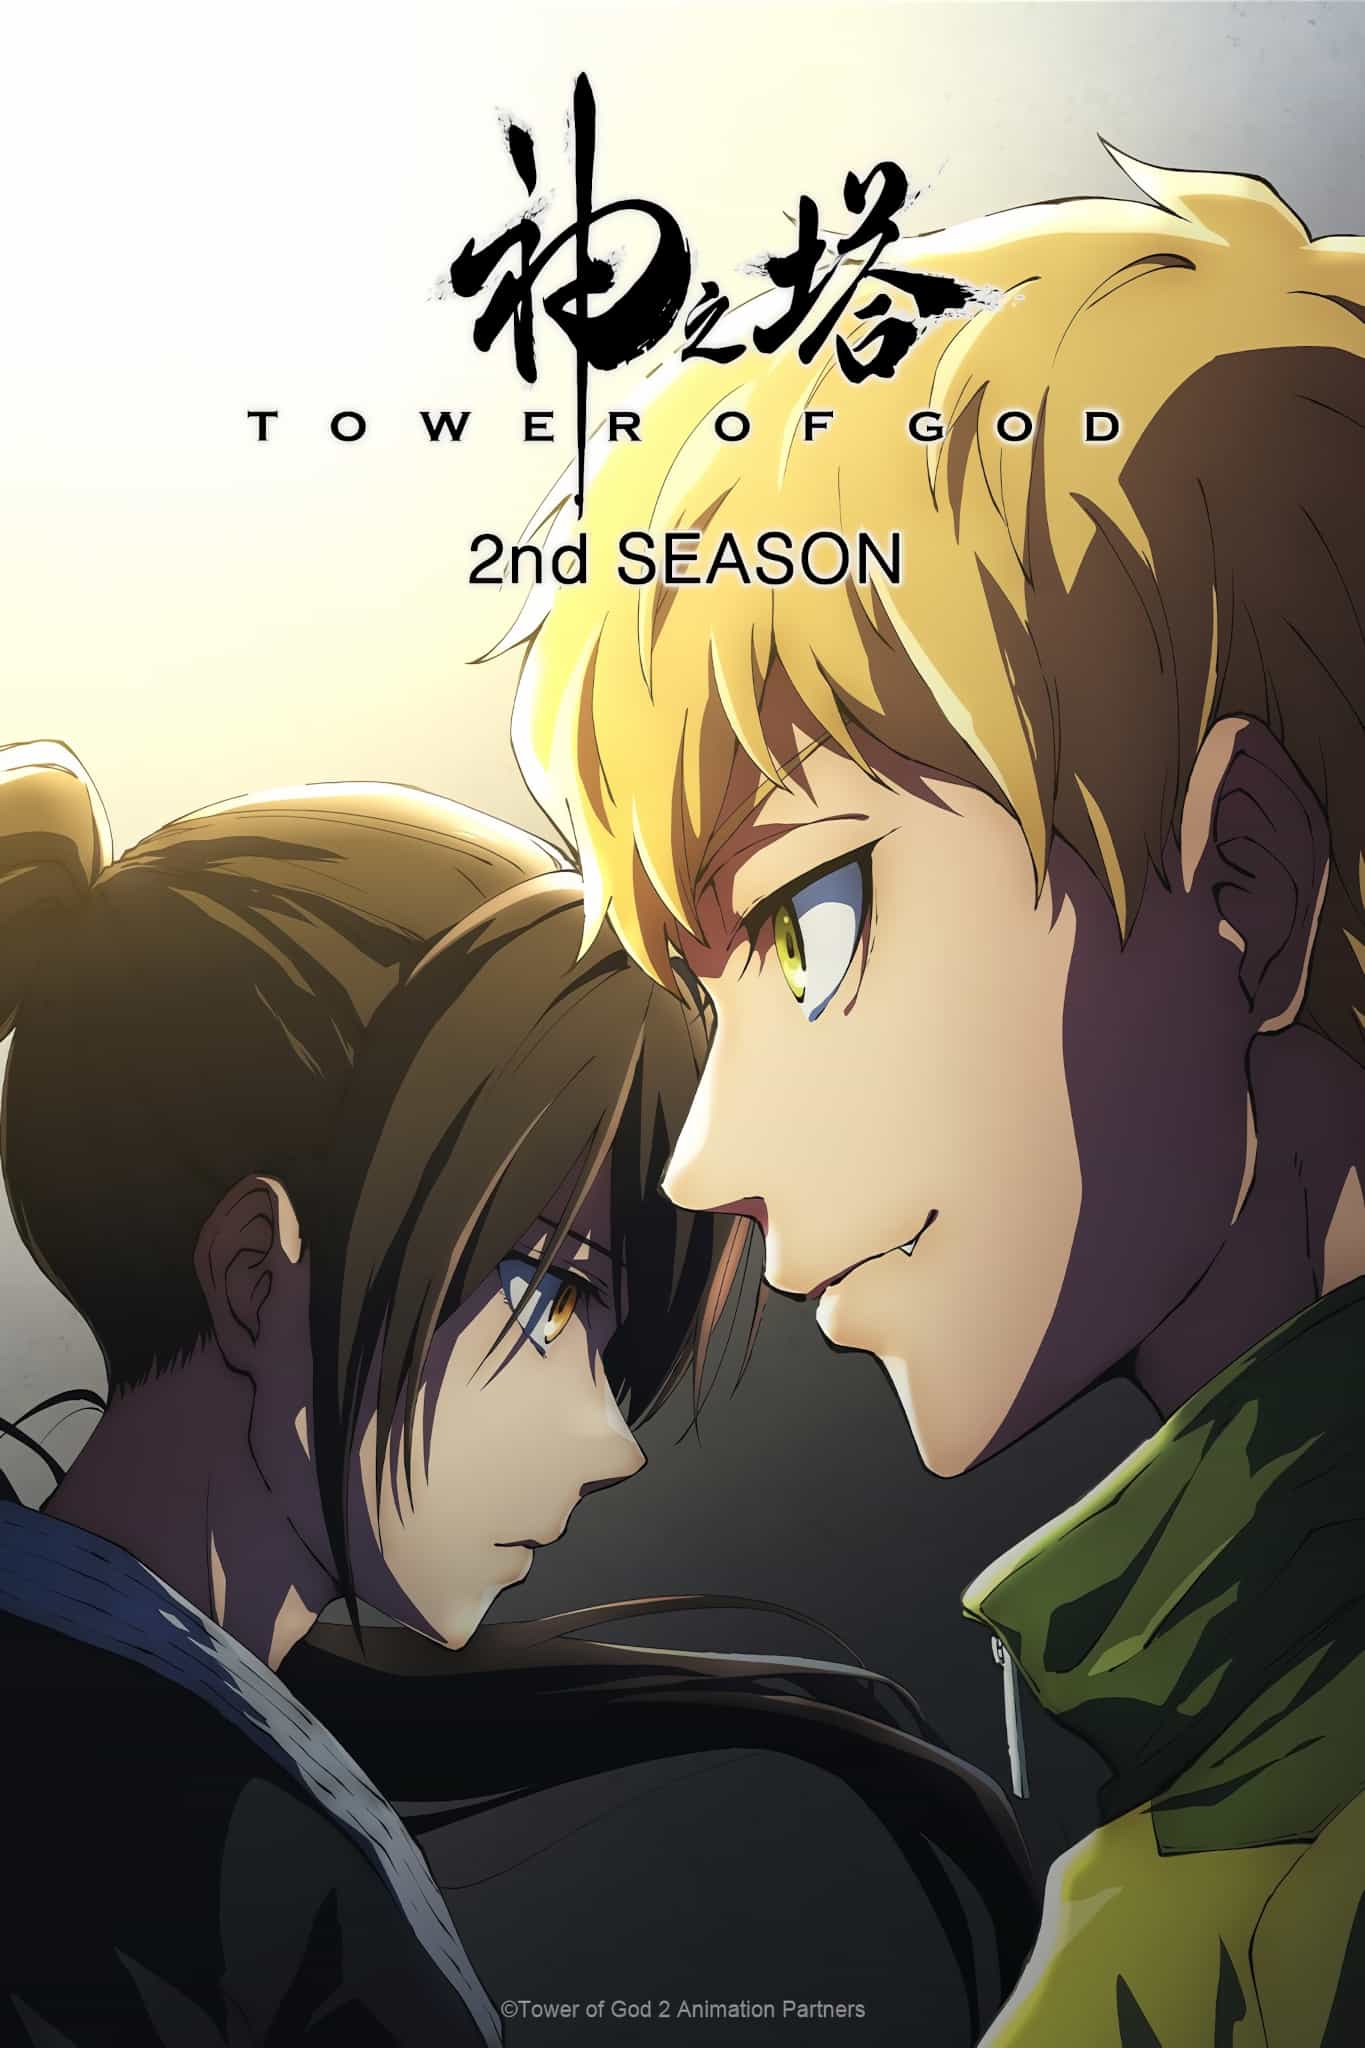 Kami no Tou 2nd Season (Tower of God Season 2) 